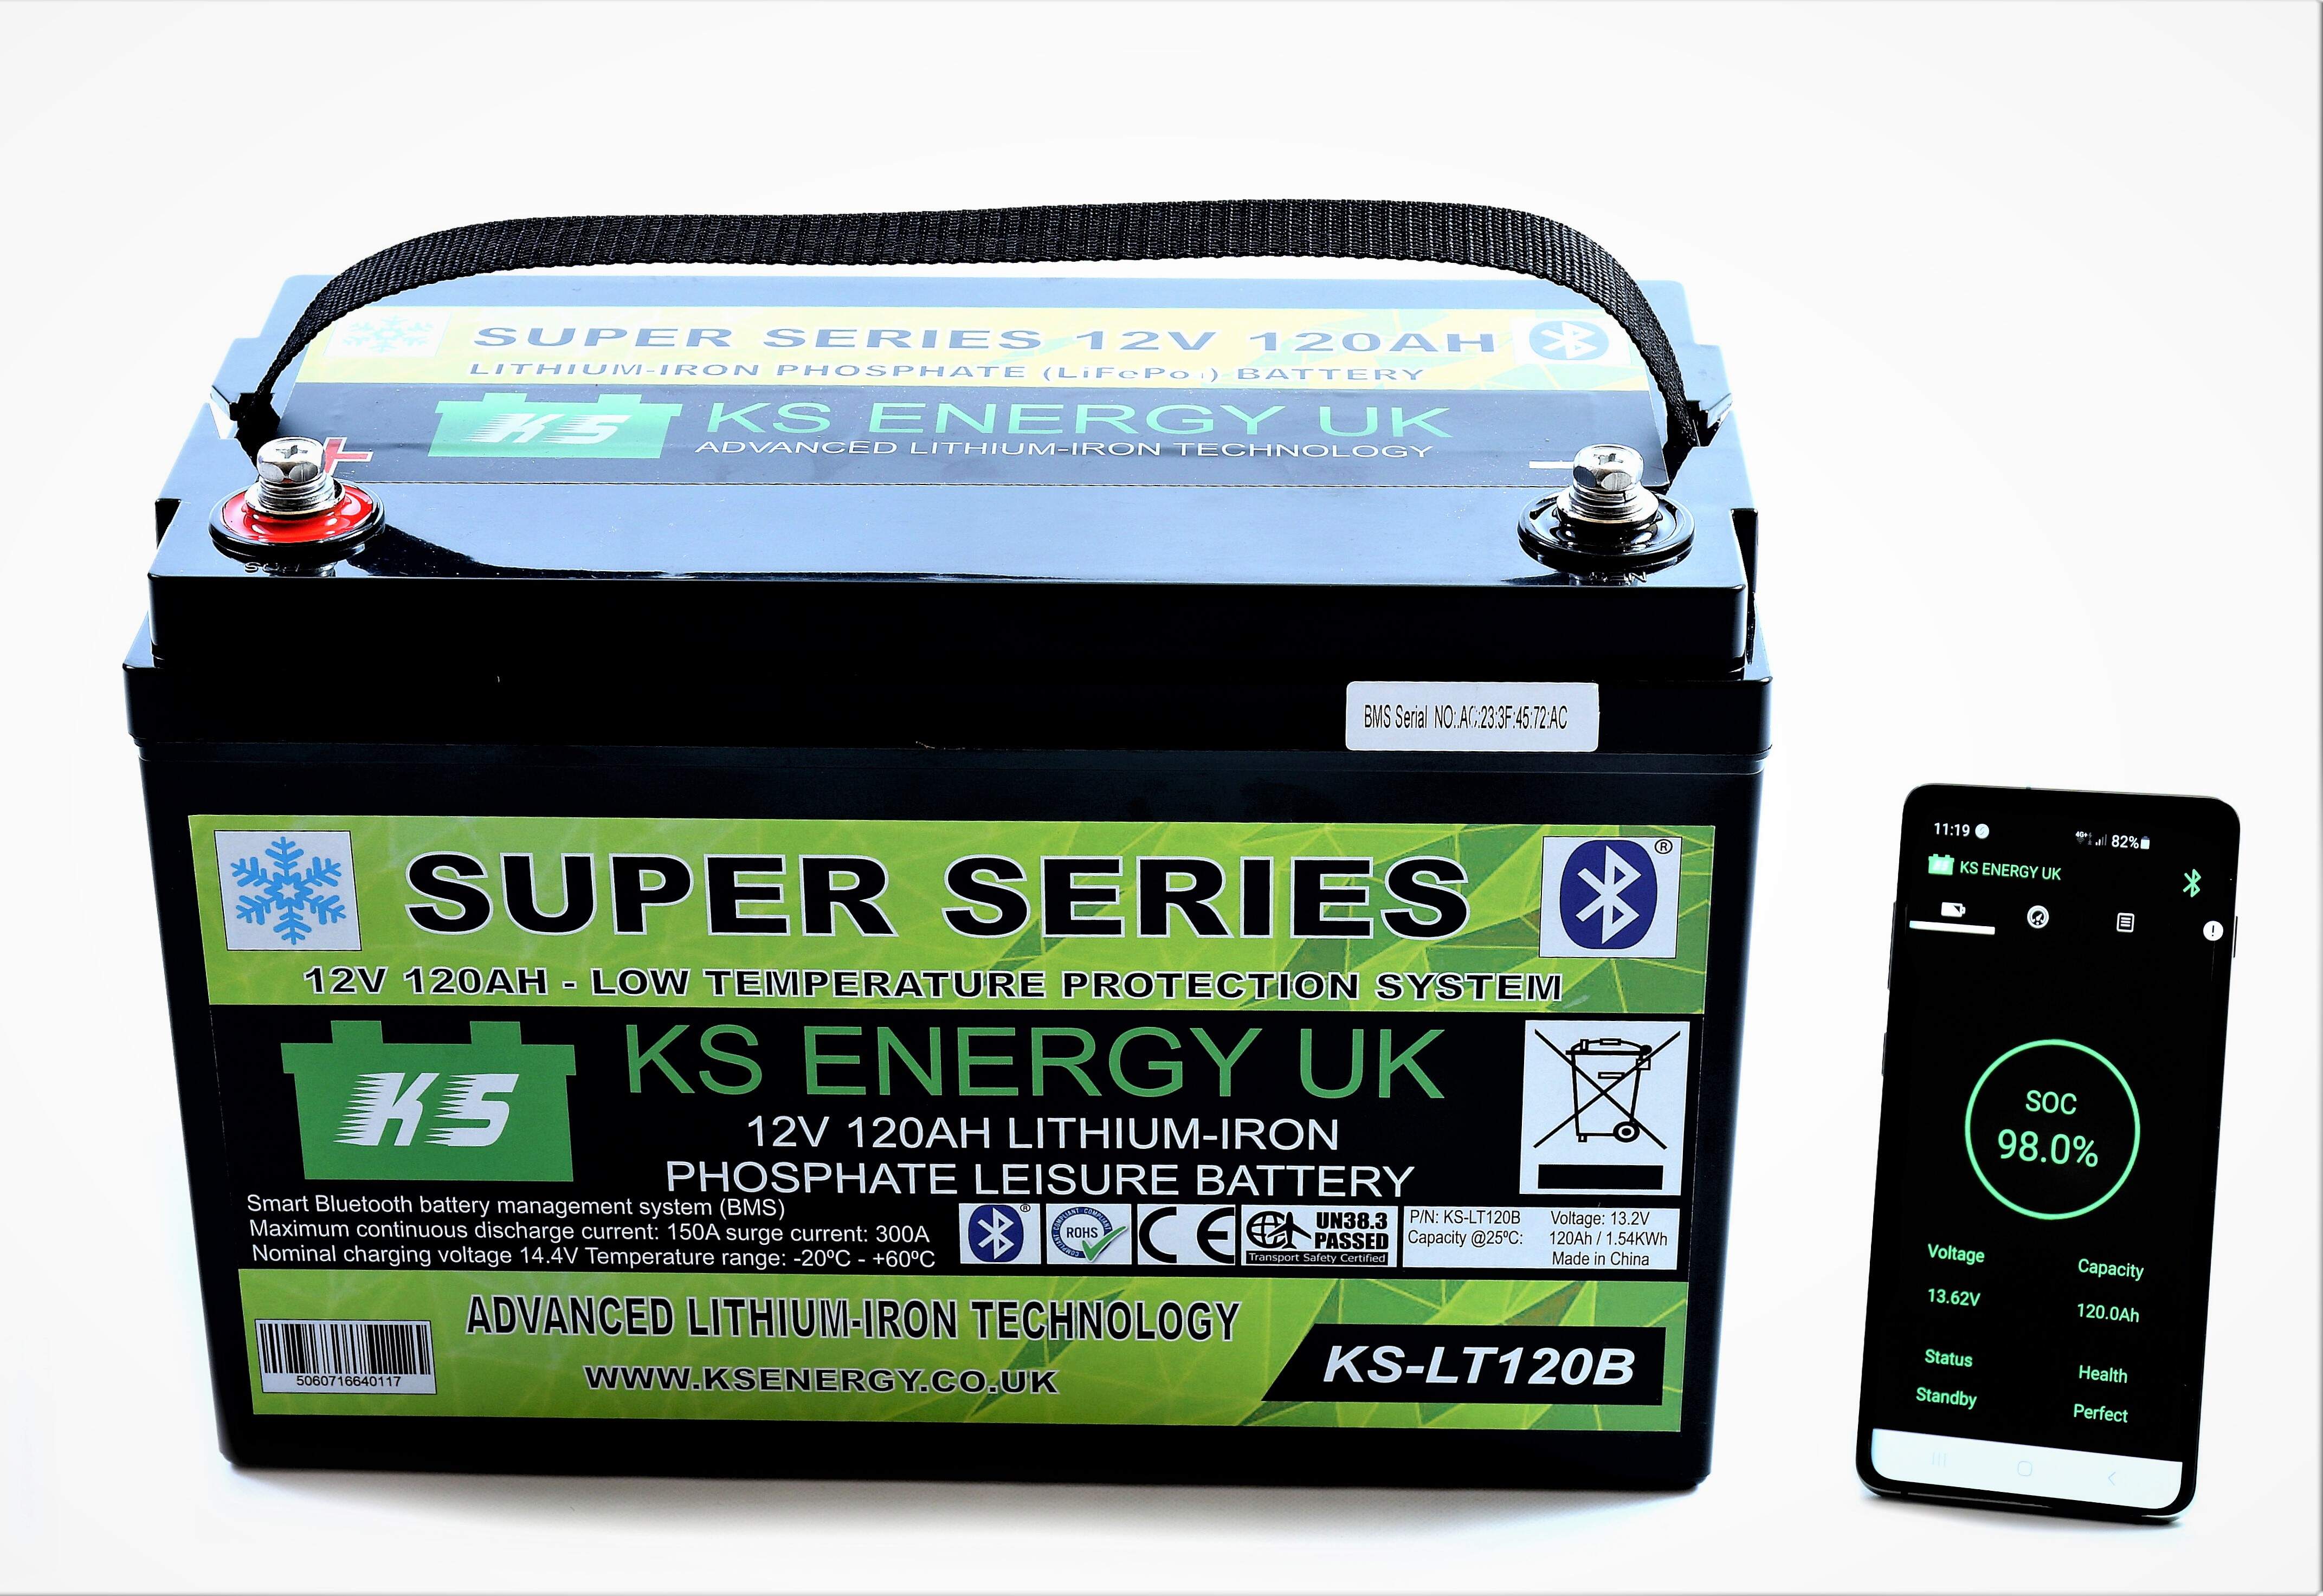 3): KS-LT120B 12v 120AH Super Series Bluetooth High Power lithium leisure battery